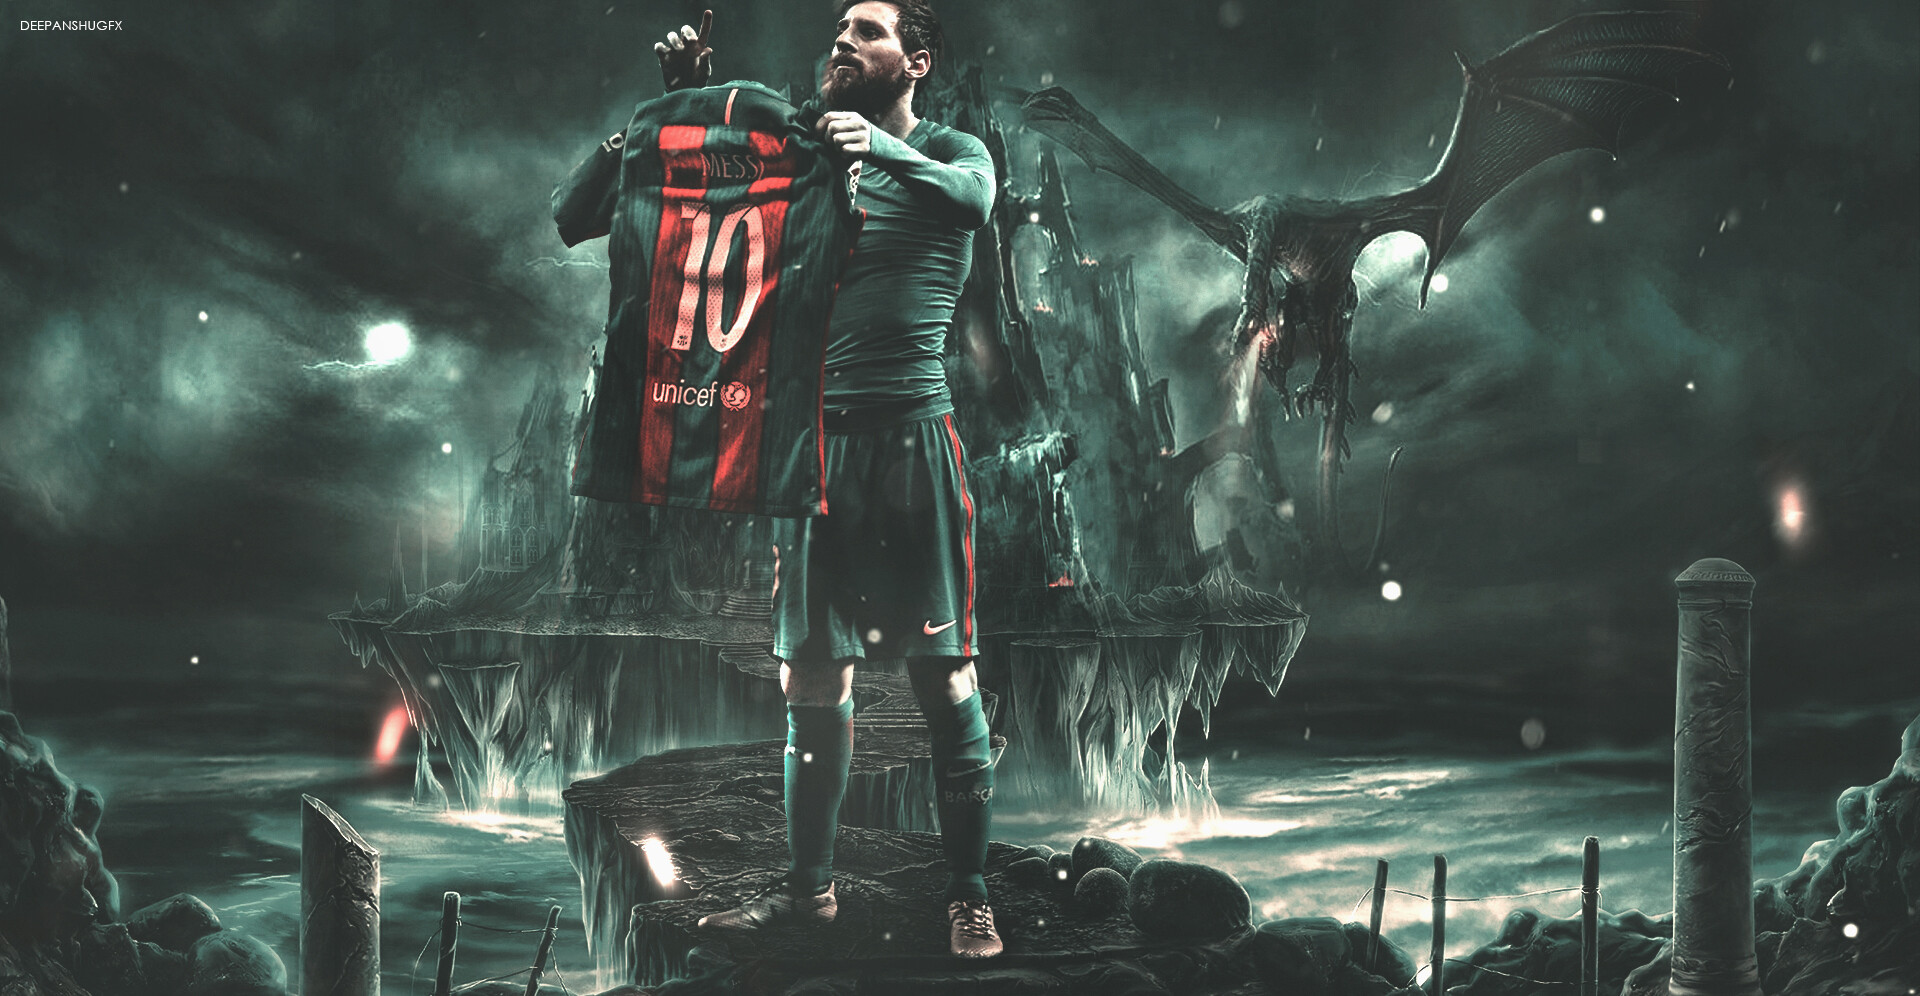 Messi - HD Wallpaper 